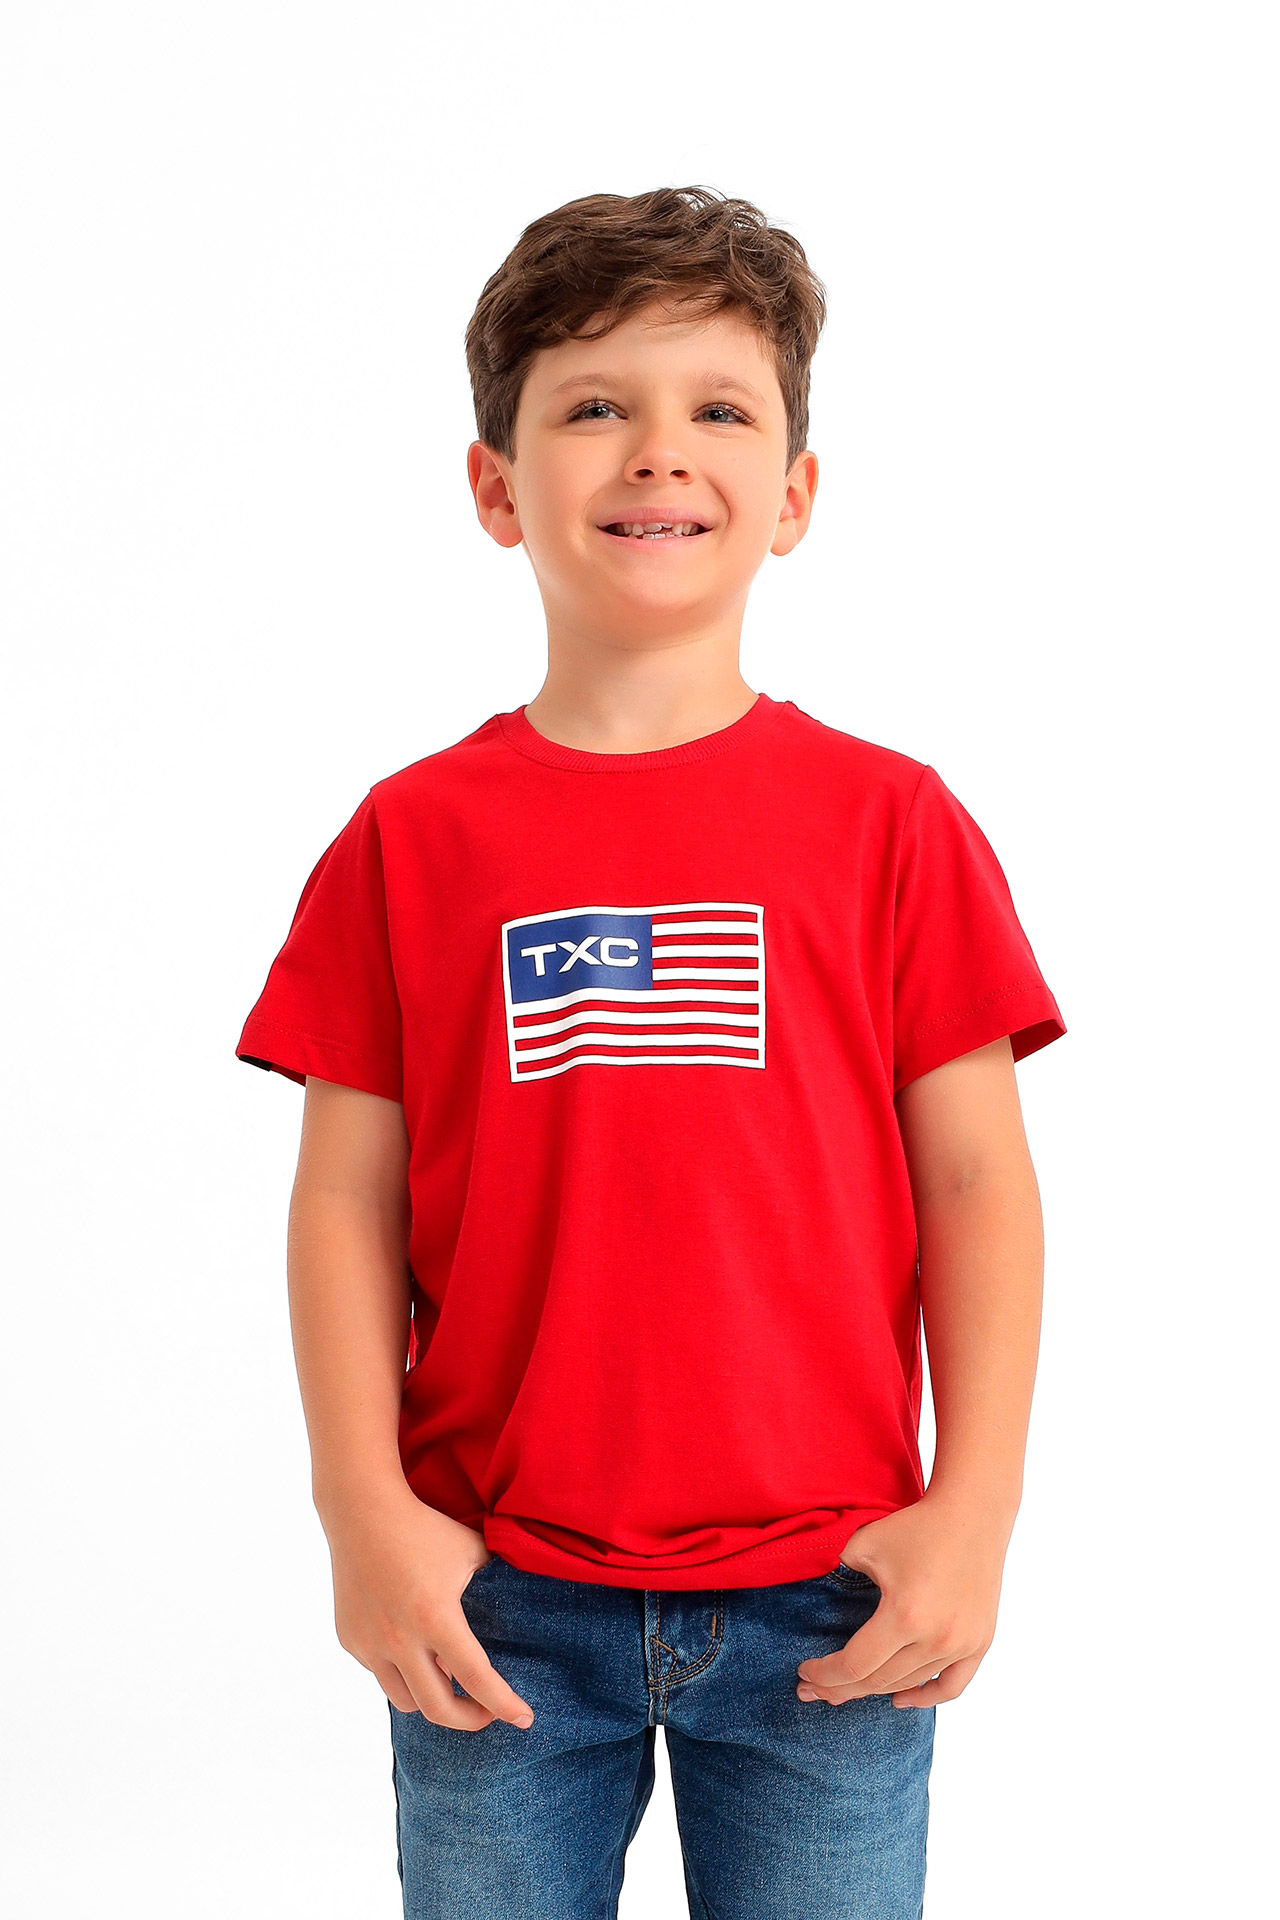 Camiseta TXC Brand Infantil 191322i Vermelho